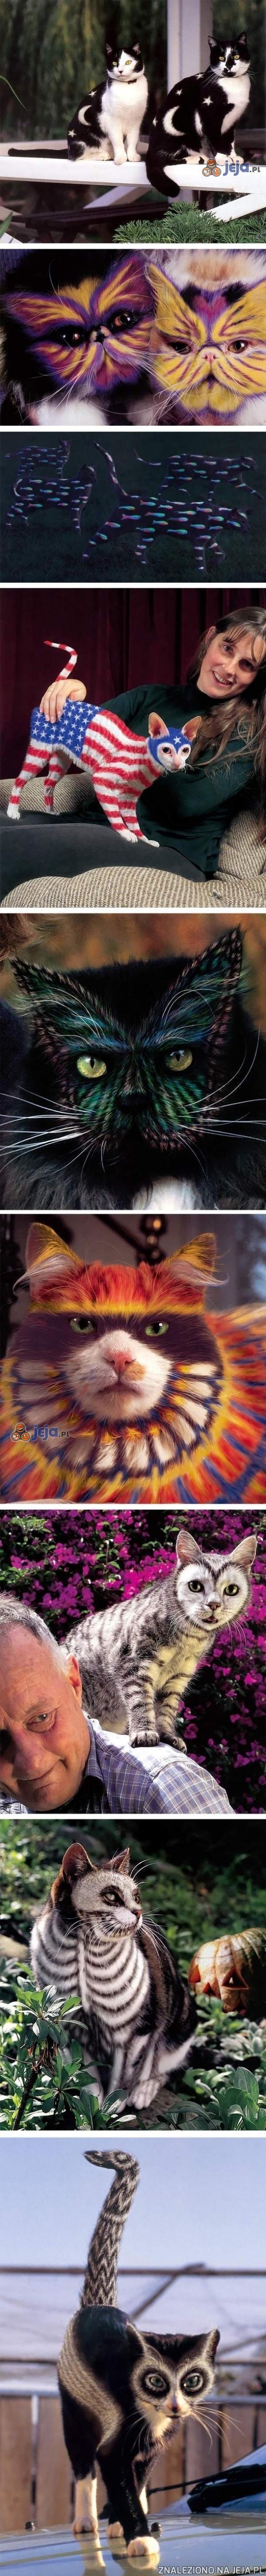 Koty po Photoshopie